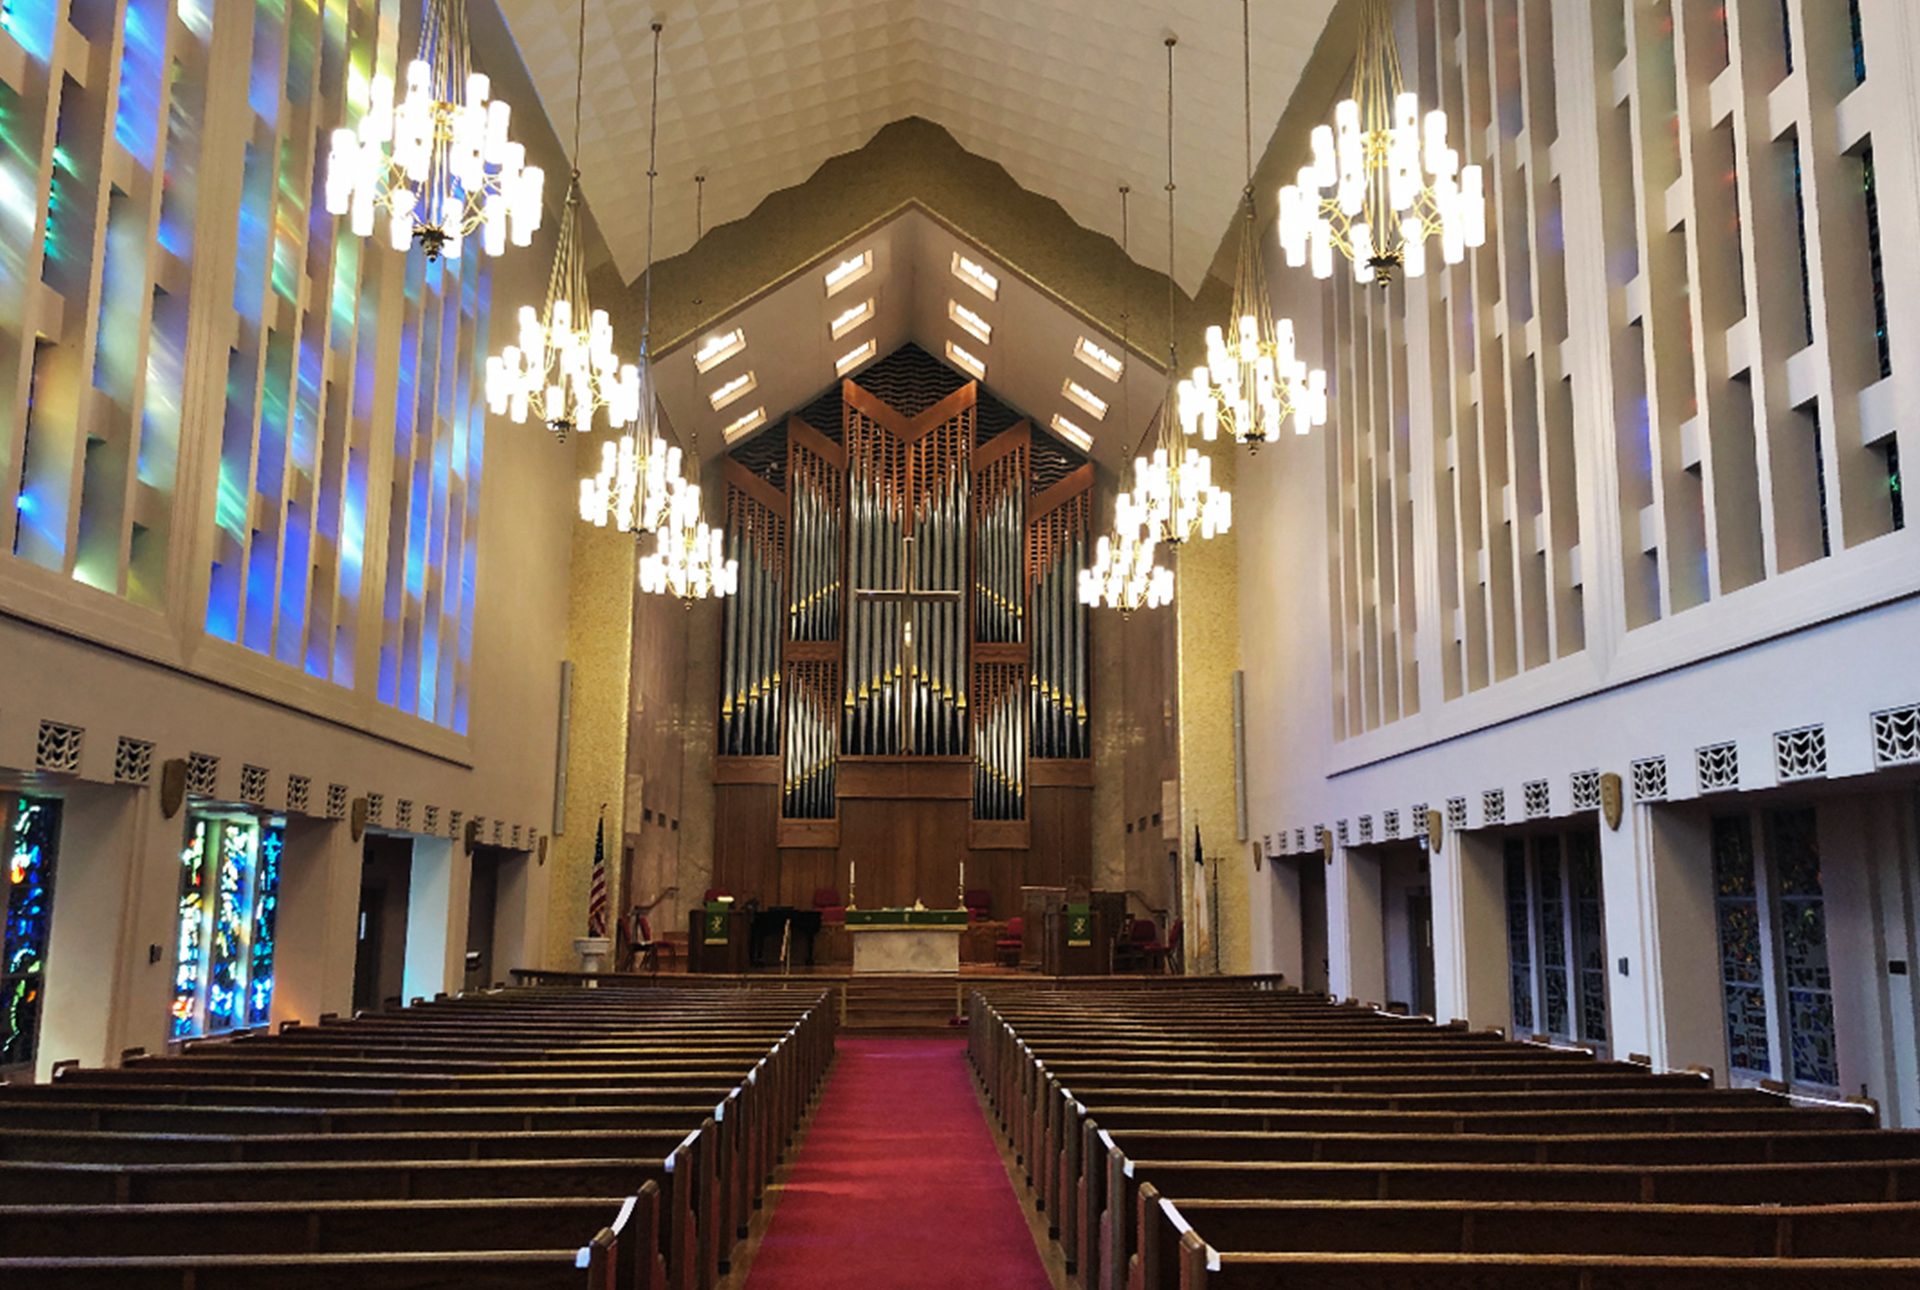 Interior of a large modern church